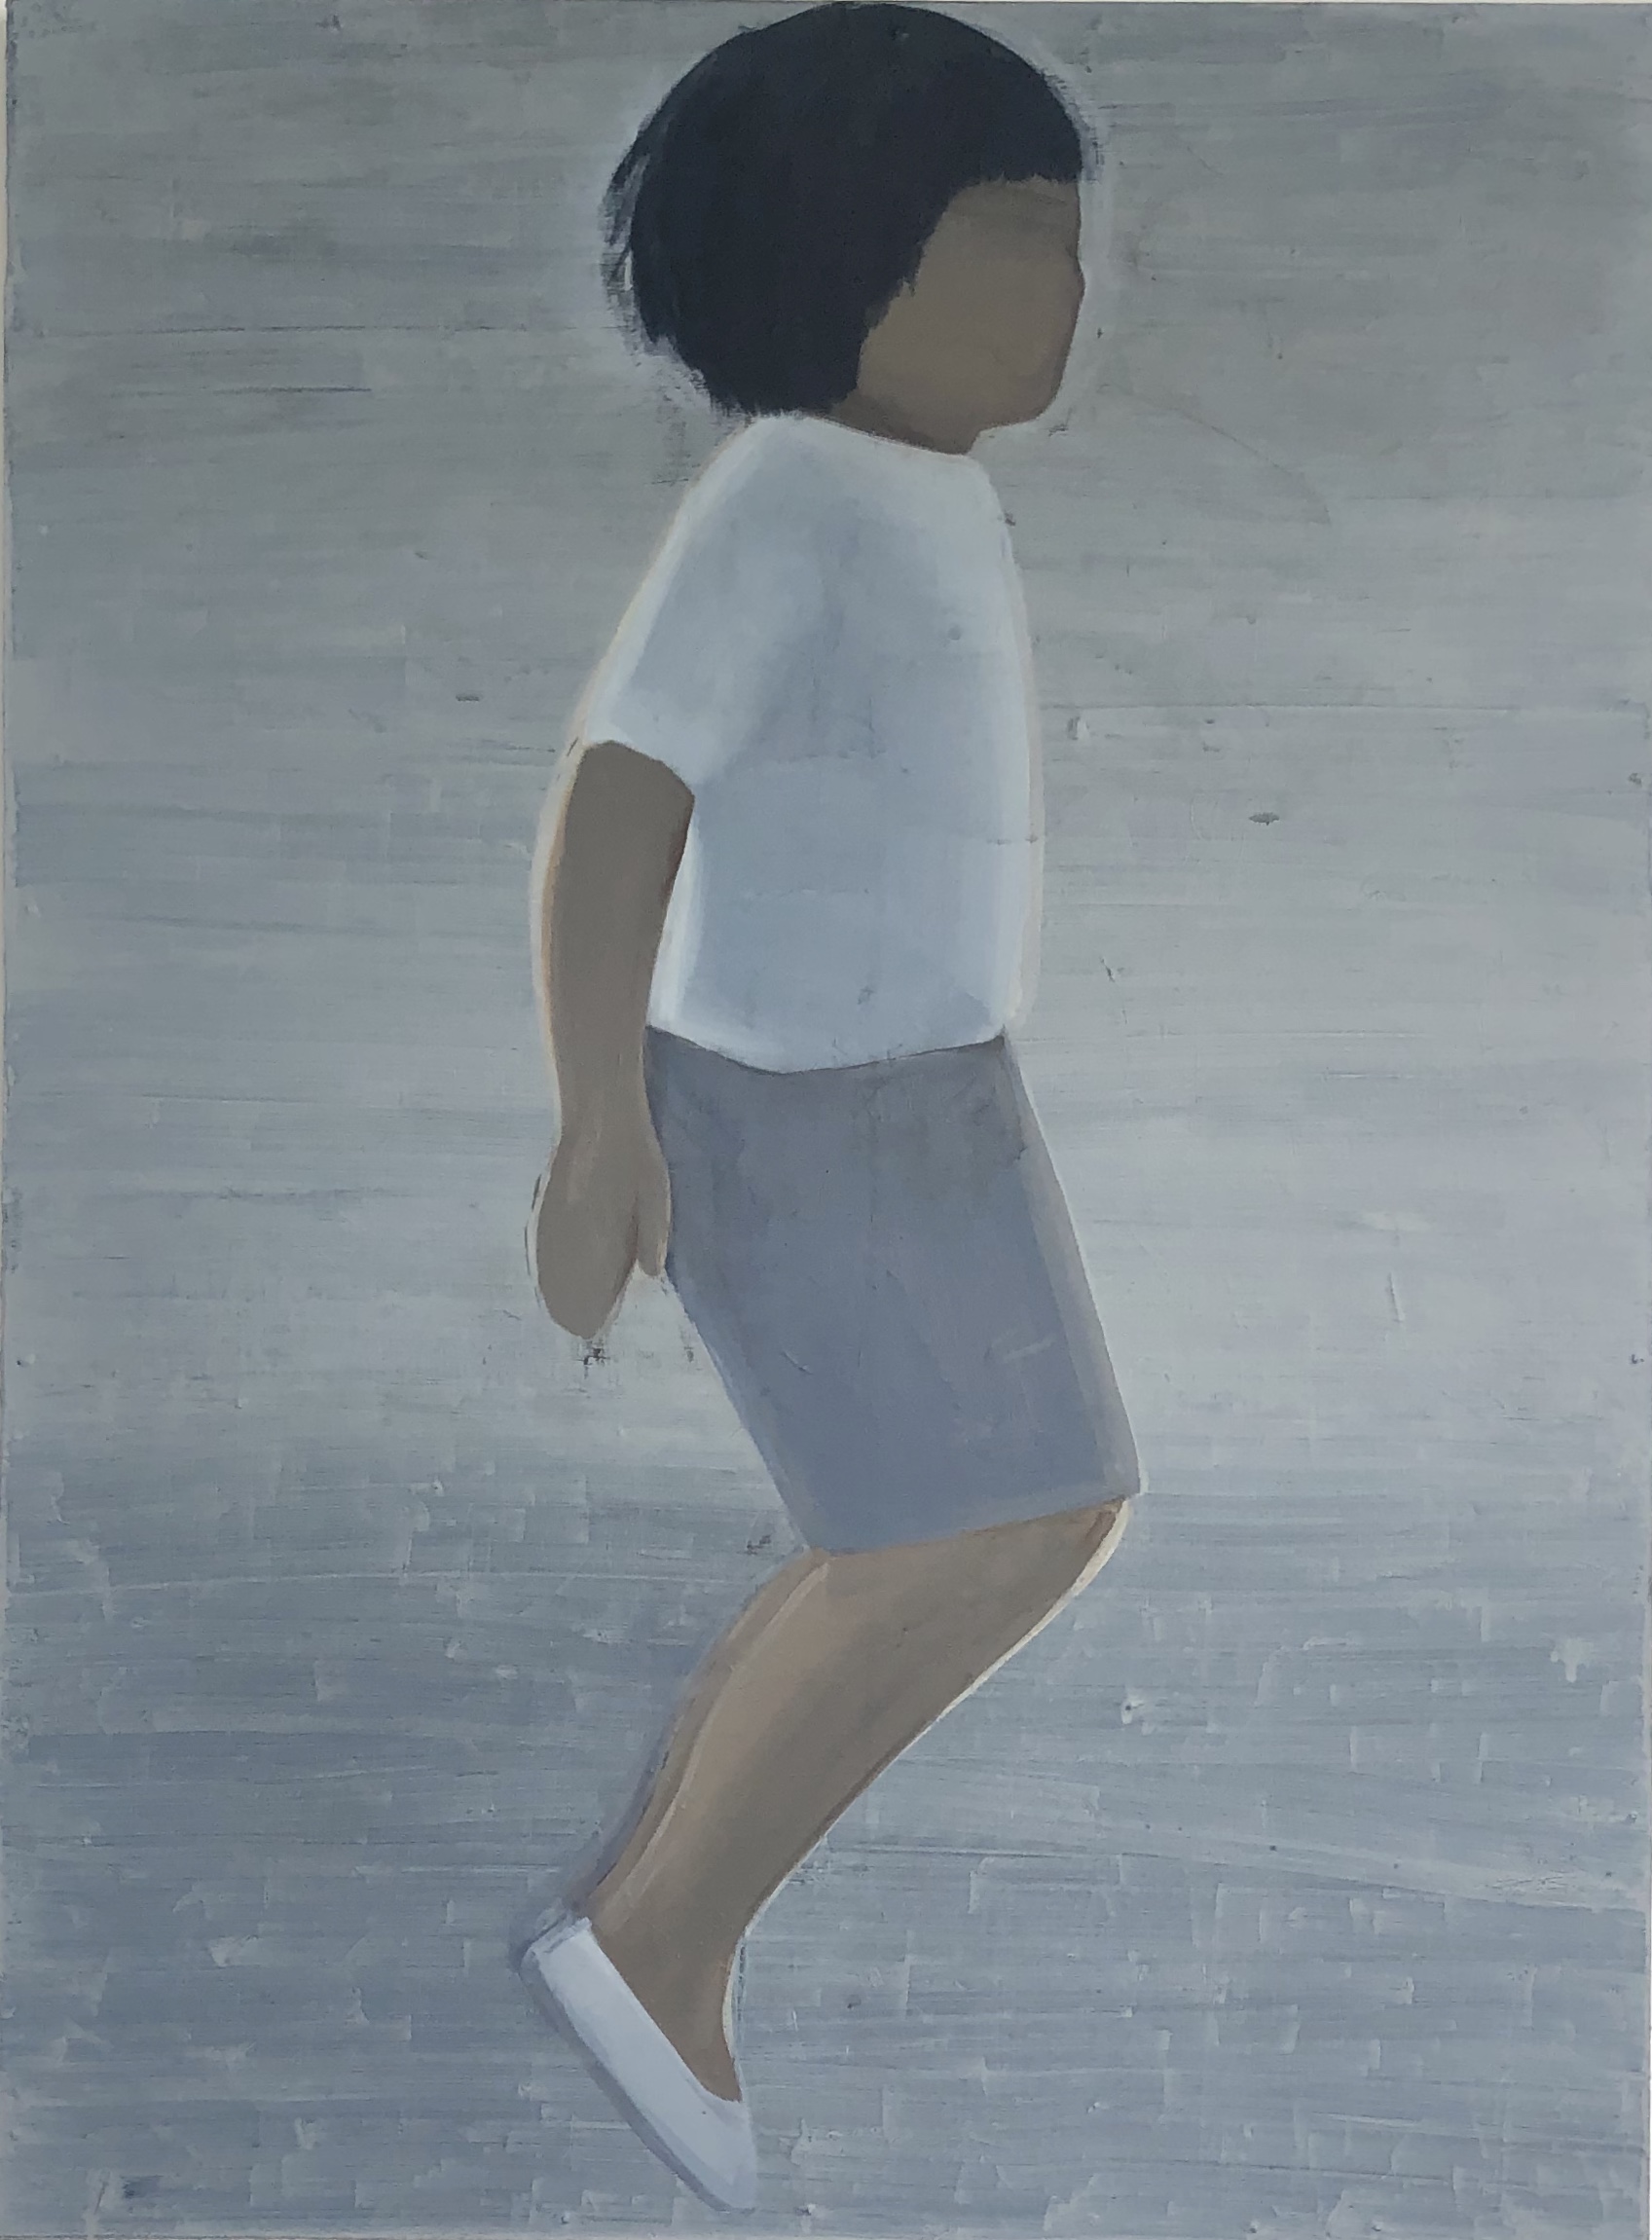 image: Miho Sato 'School Ground 4' acrylic on board, 95×70.5cm, 2020